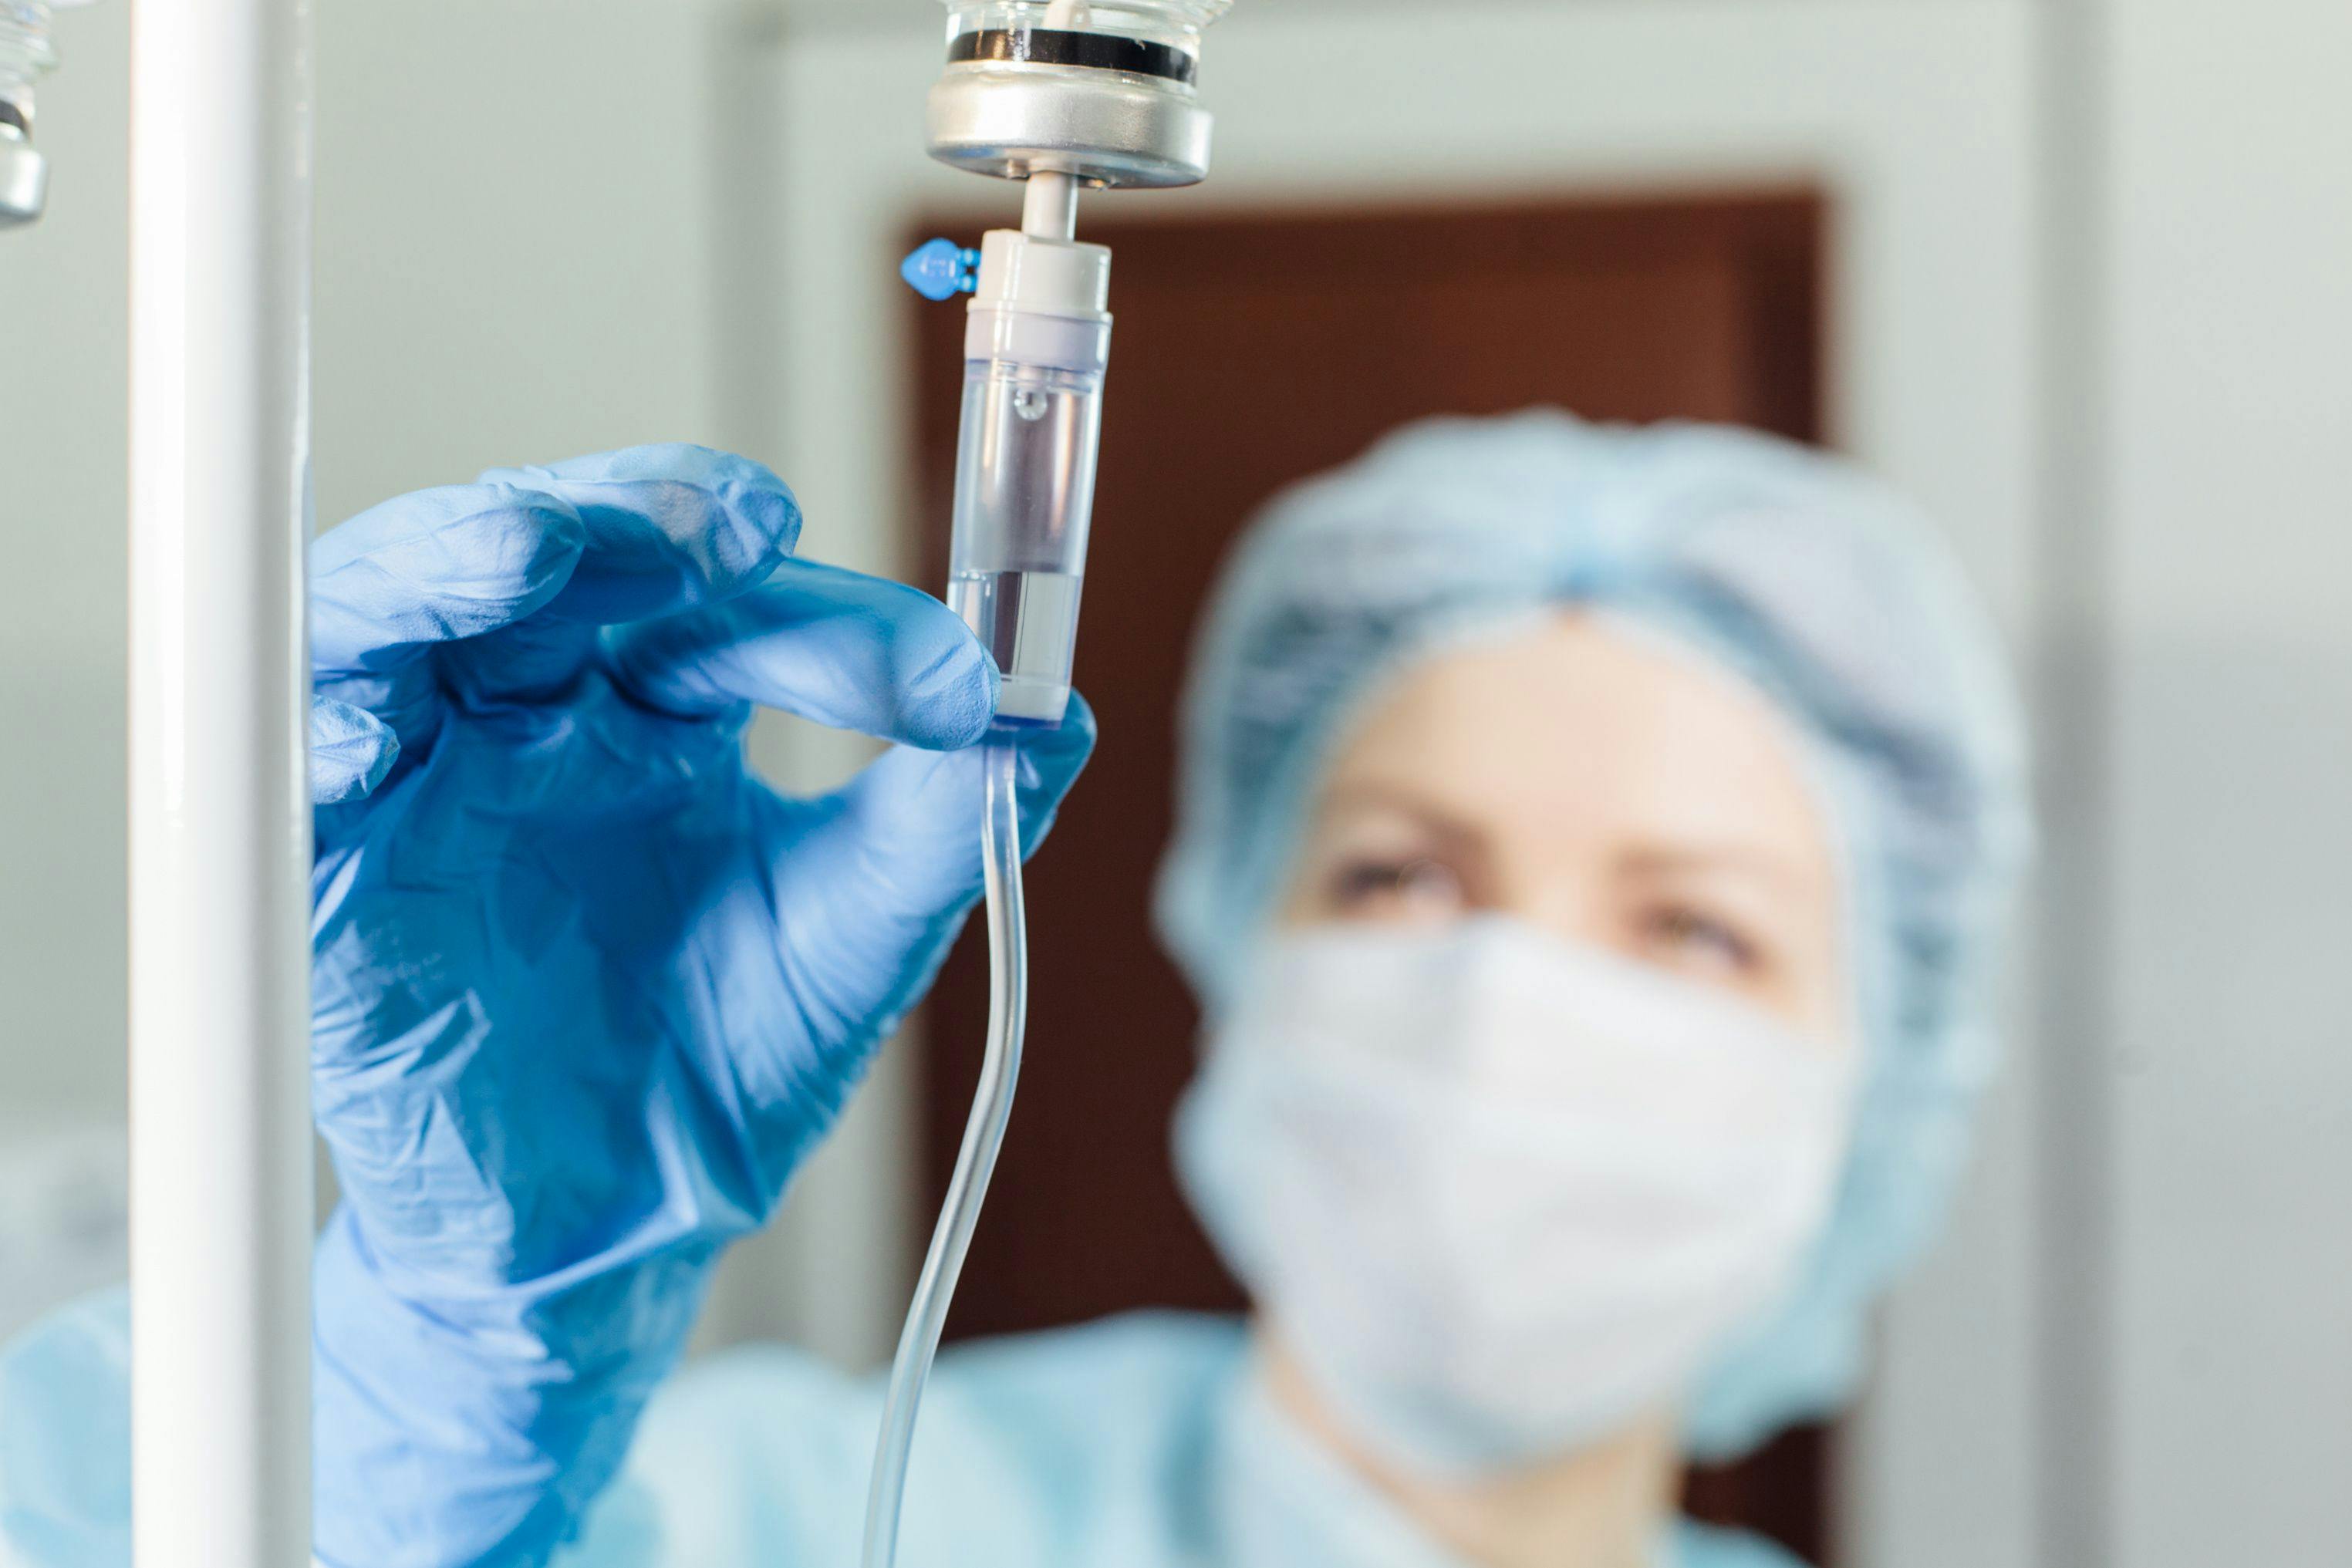 Nurse connecting an intravenous drip in hospital room. | Image Credit: satyrenko - stock.adobe.com